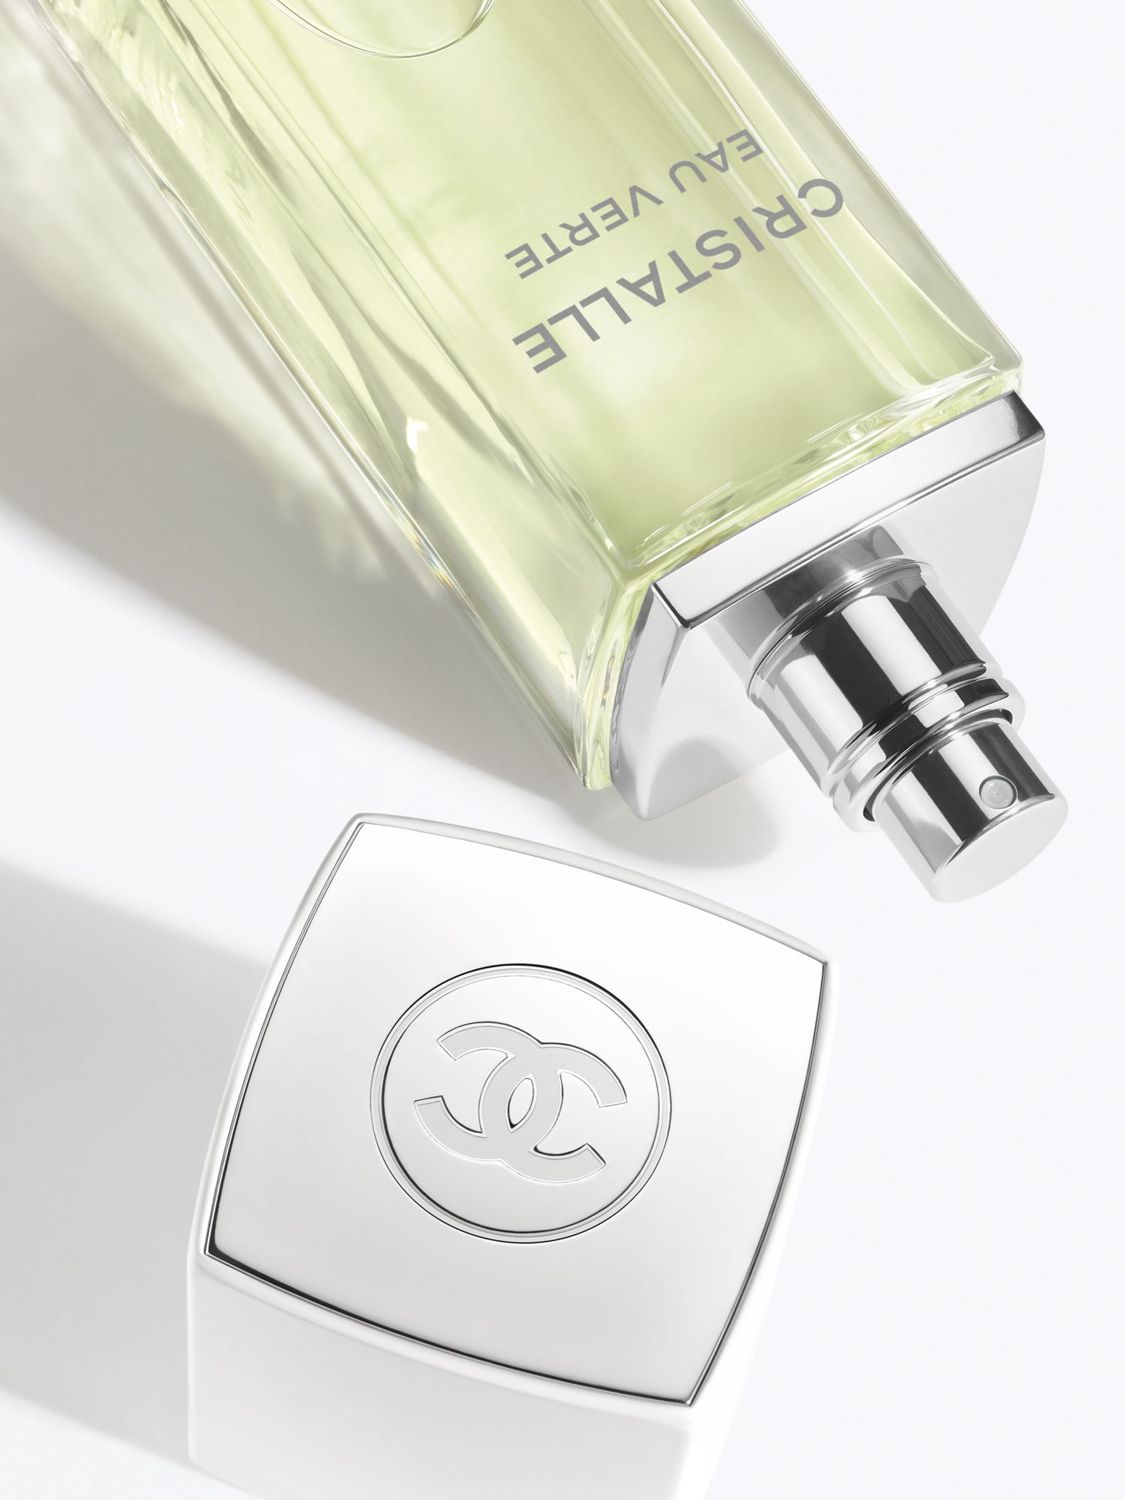 CHANEL Cristalle Eau Verte Perfume Review - Discontinued - Major